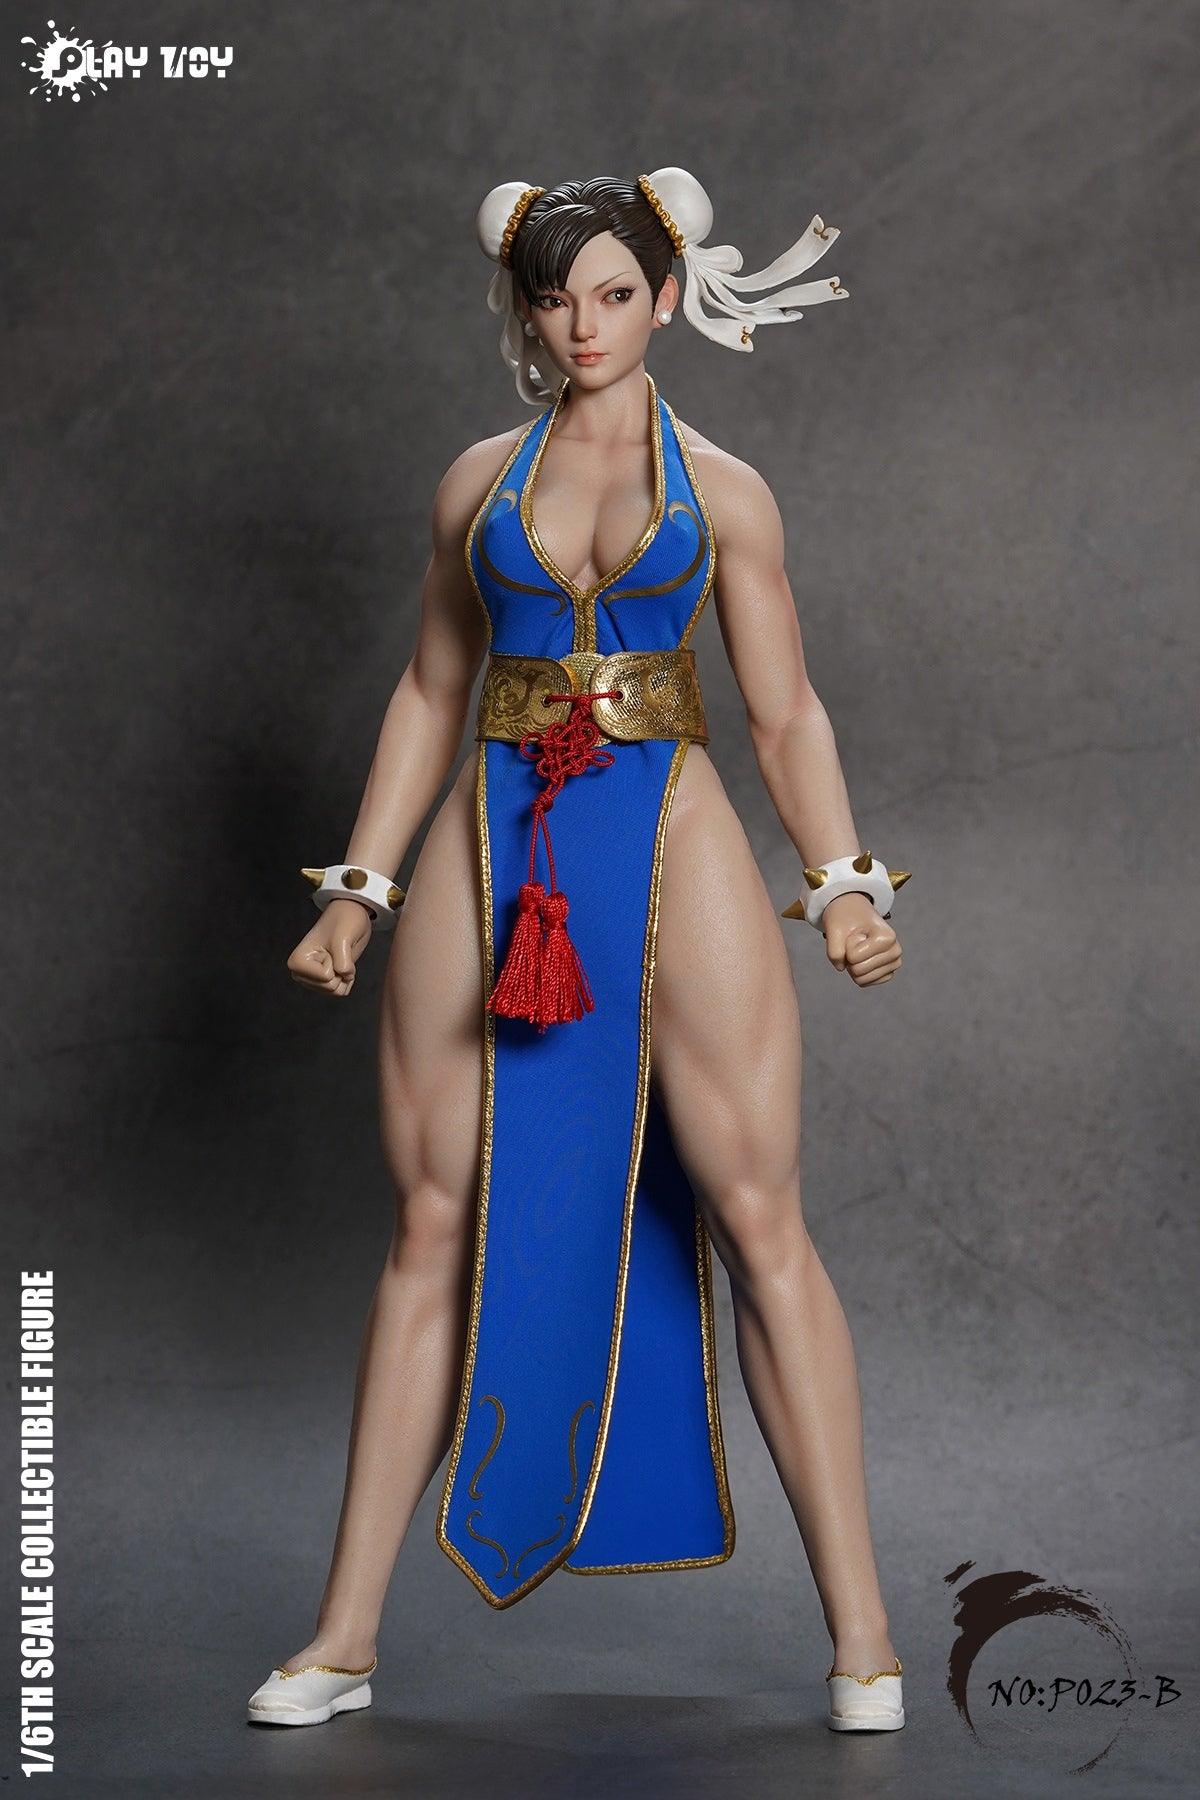 PlayToy - 1:6 Combat Goddess 2.0 Action Figure